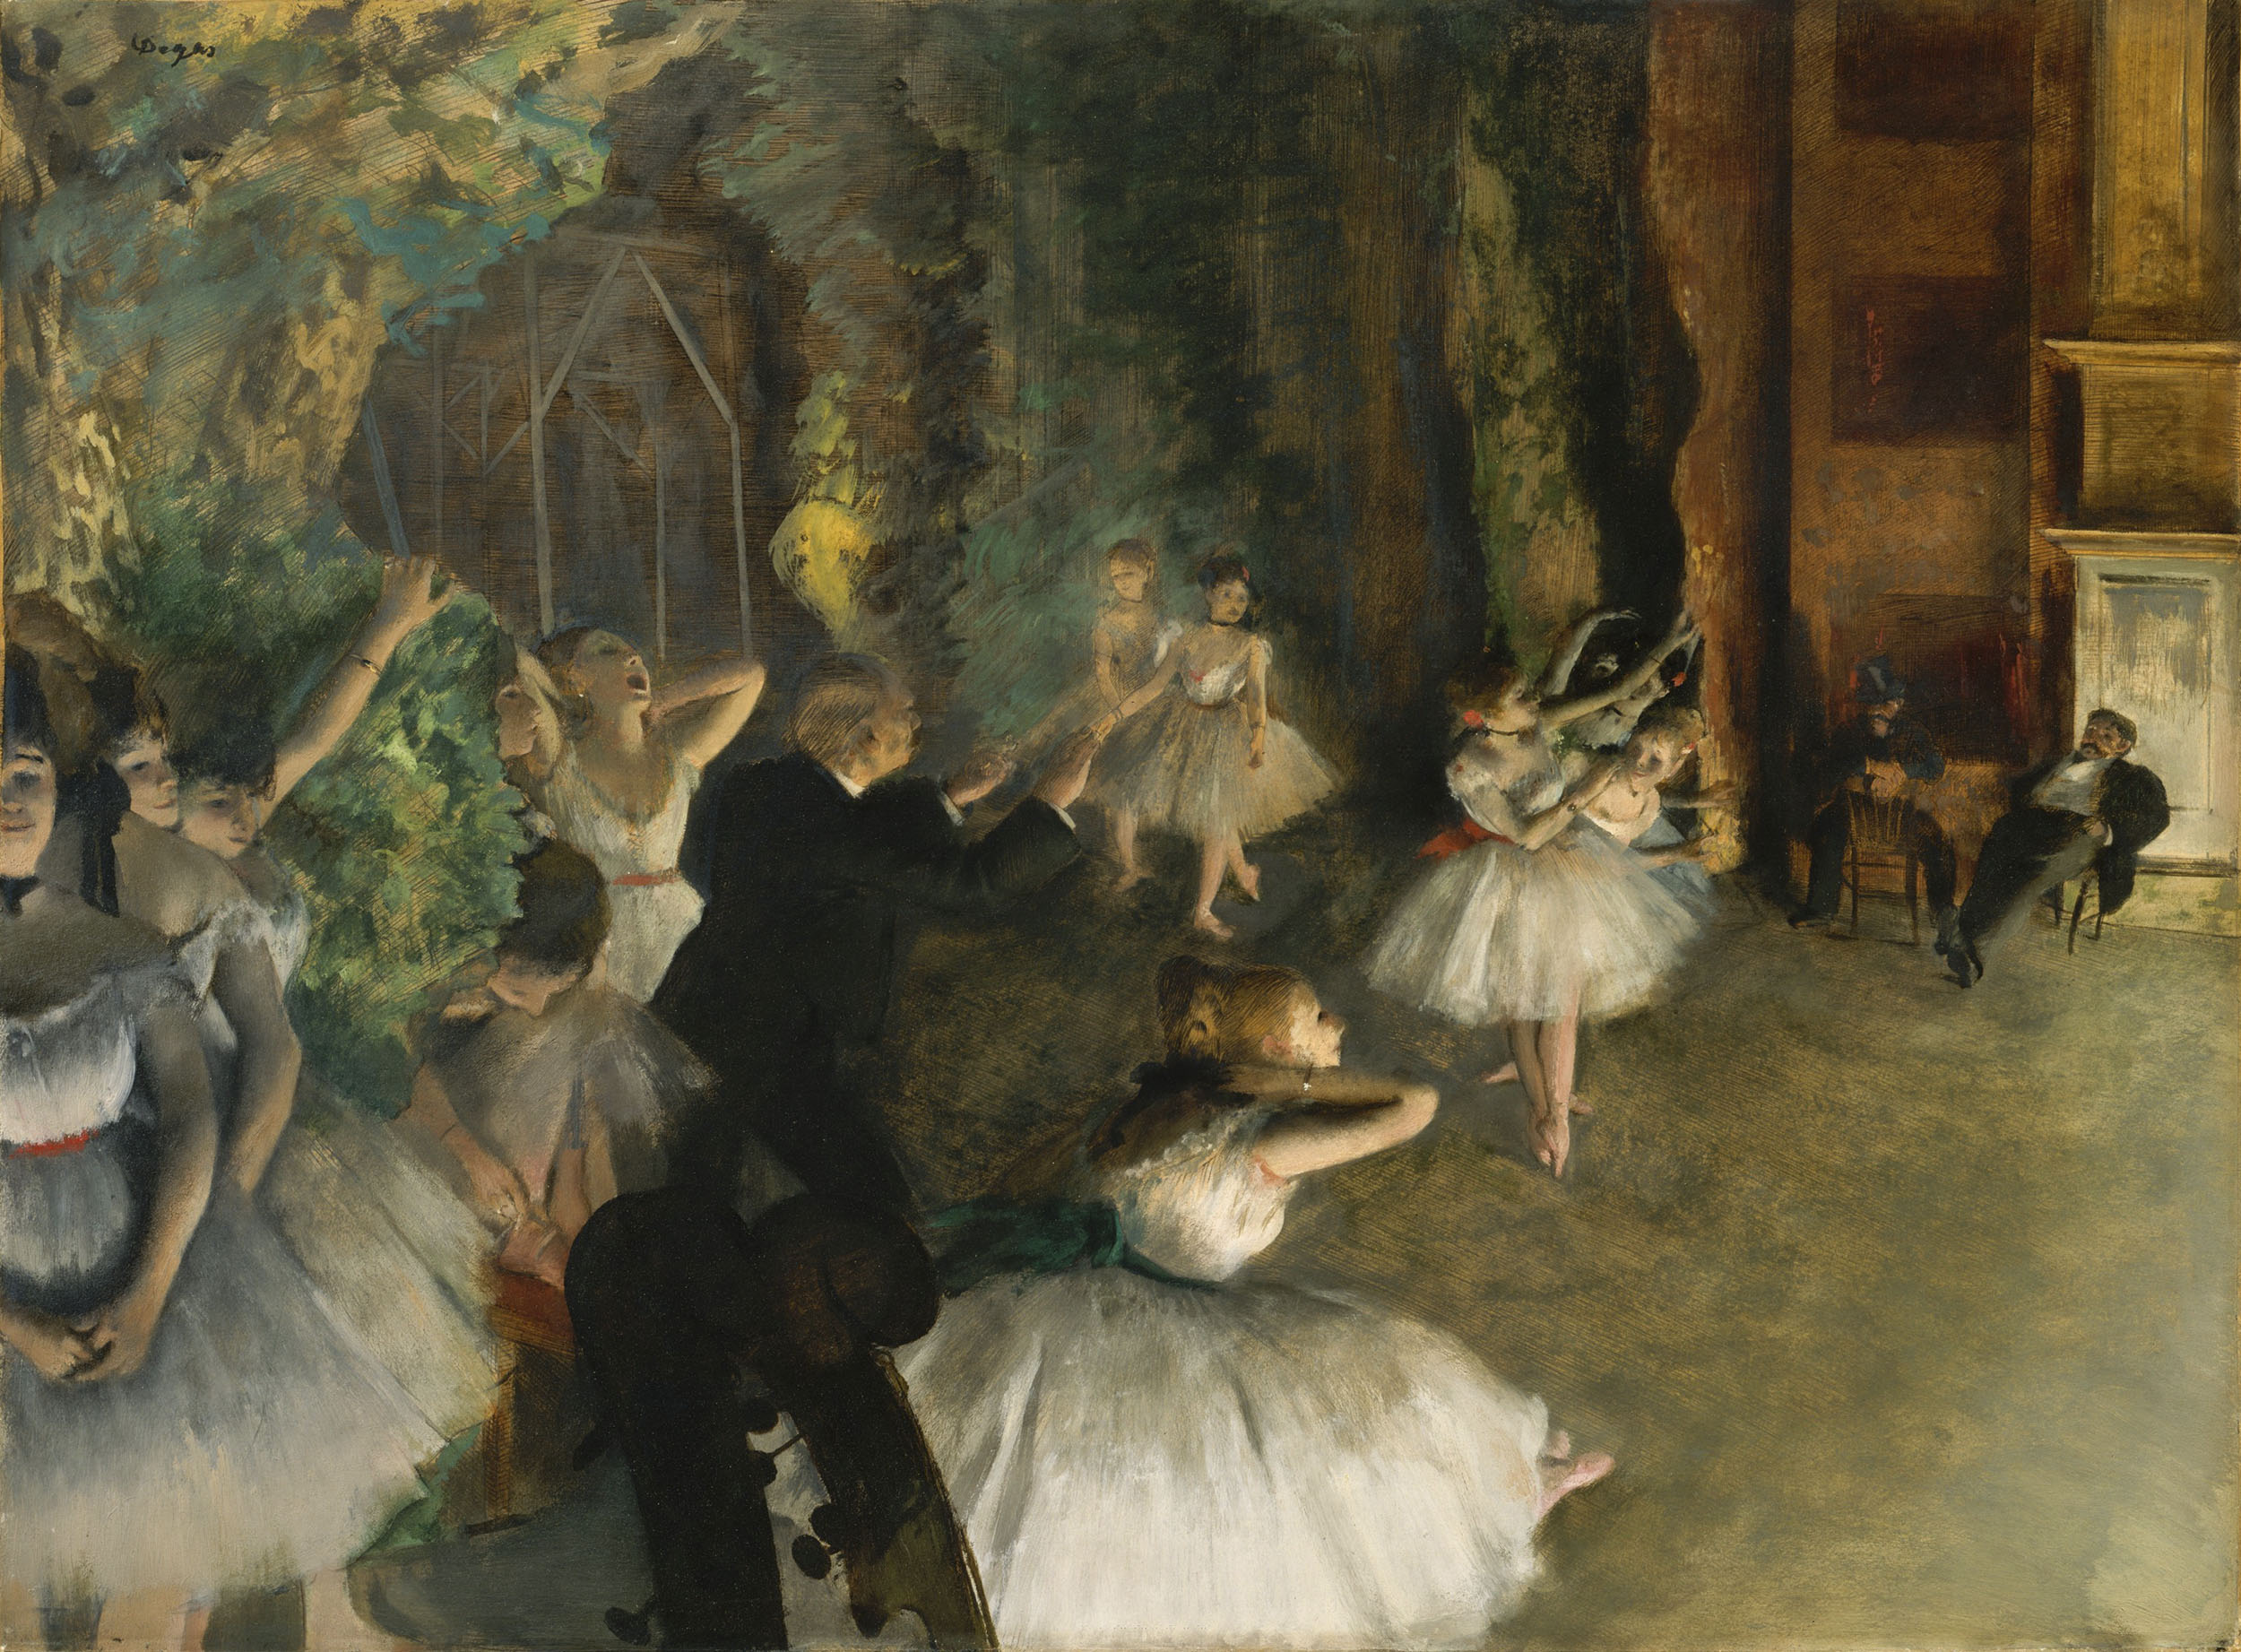 Эдгар Дега. Репетиция балета на сцене. Около 1874.